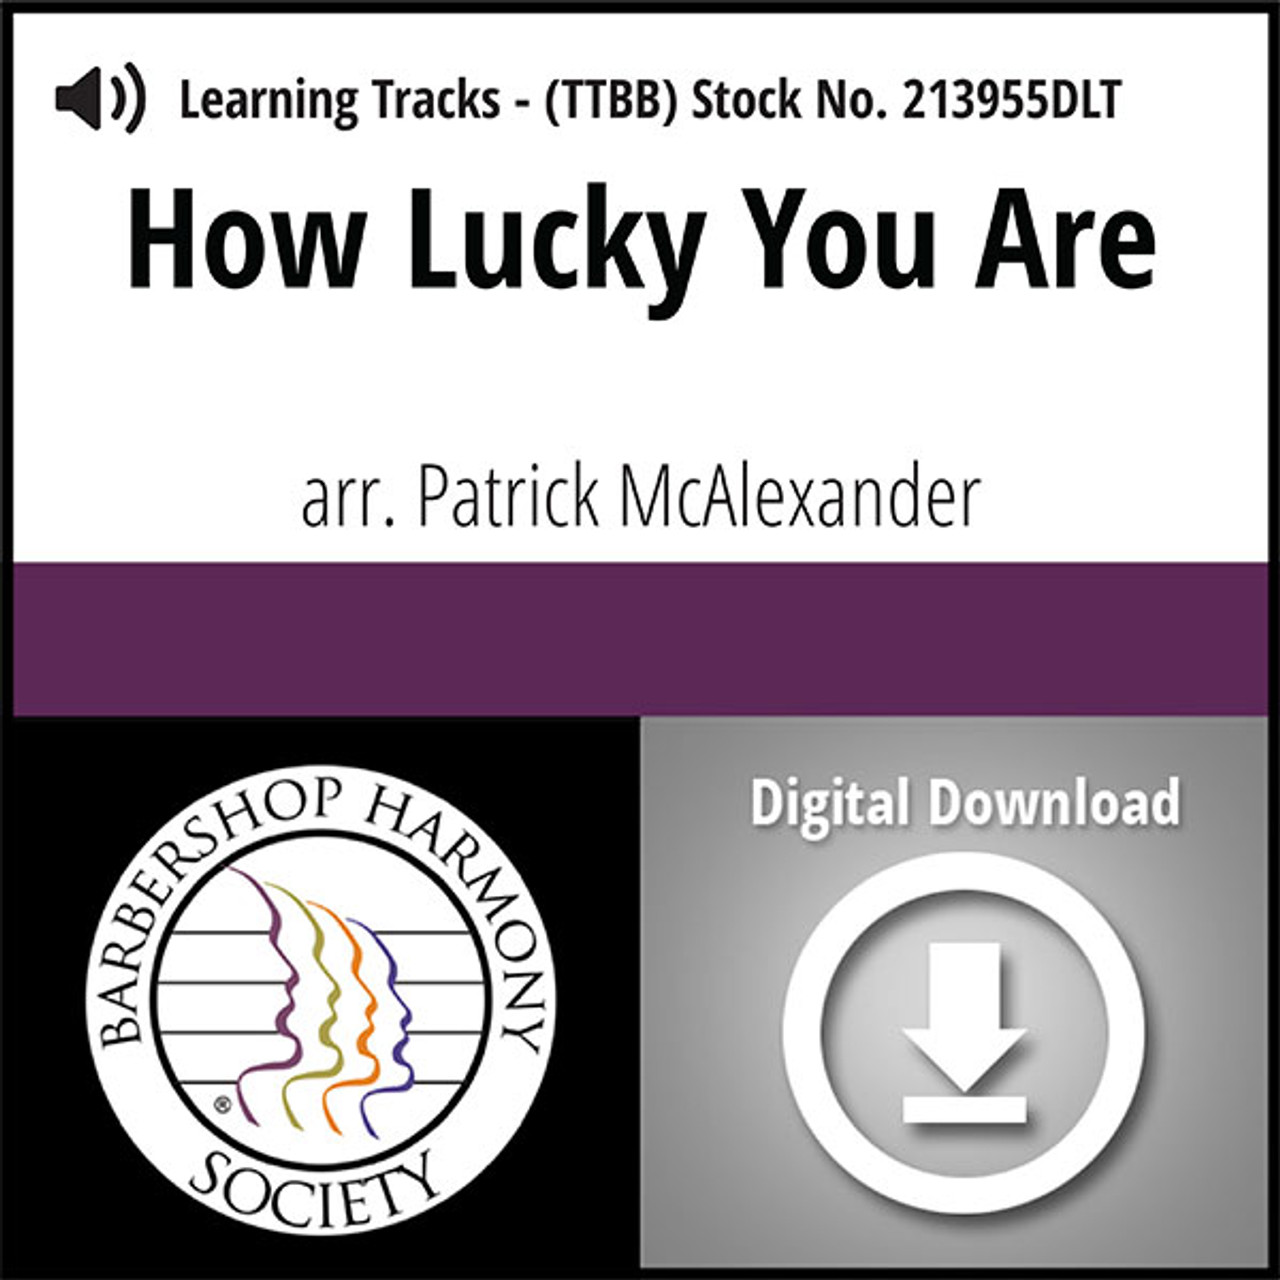 How Lucky You Are (TTBB) (arr. McAlexander) - Digital Tracks for 213979